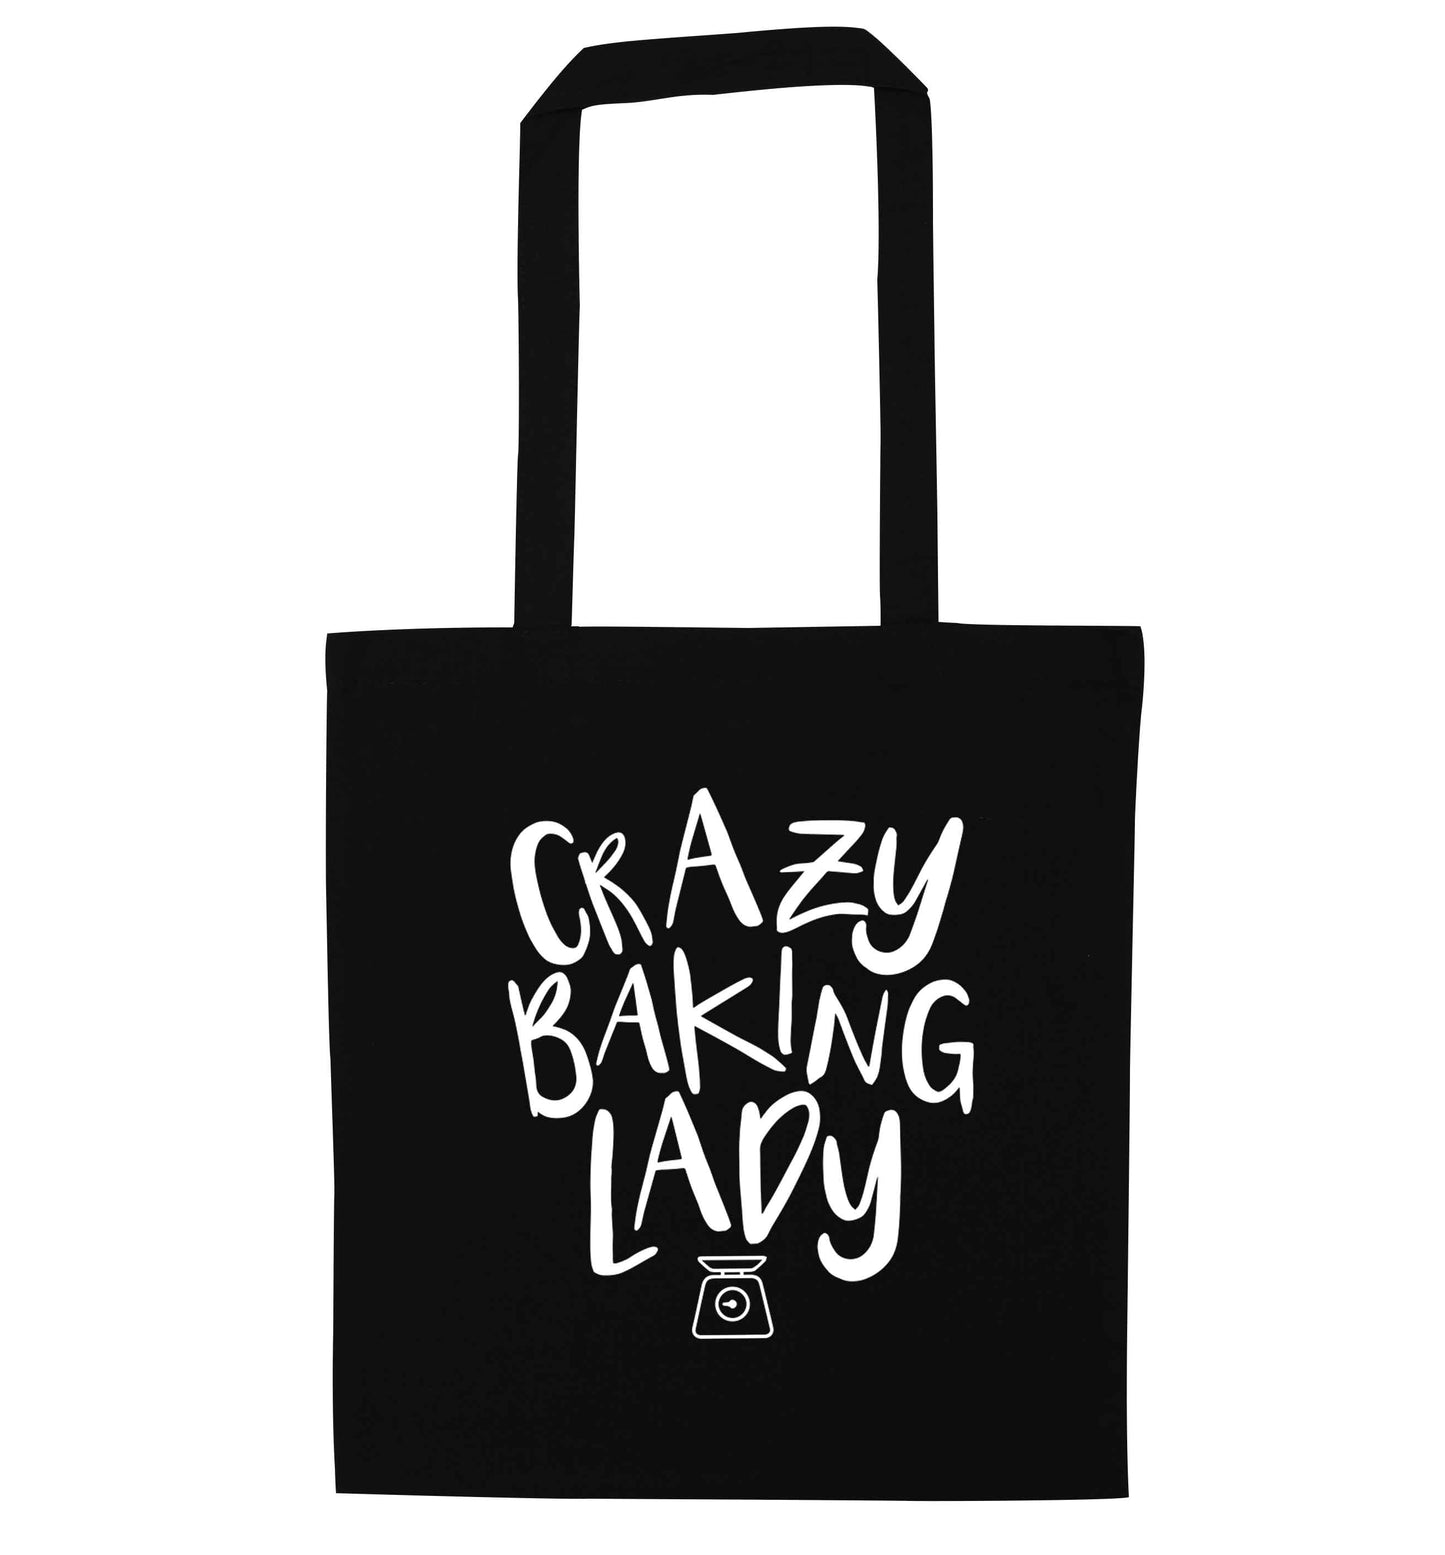 Crazy baking lady black tote bag